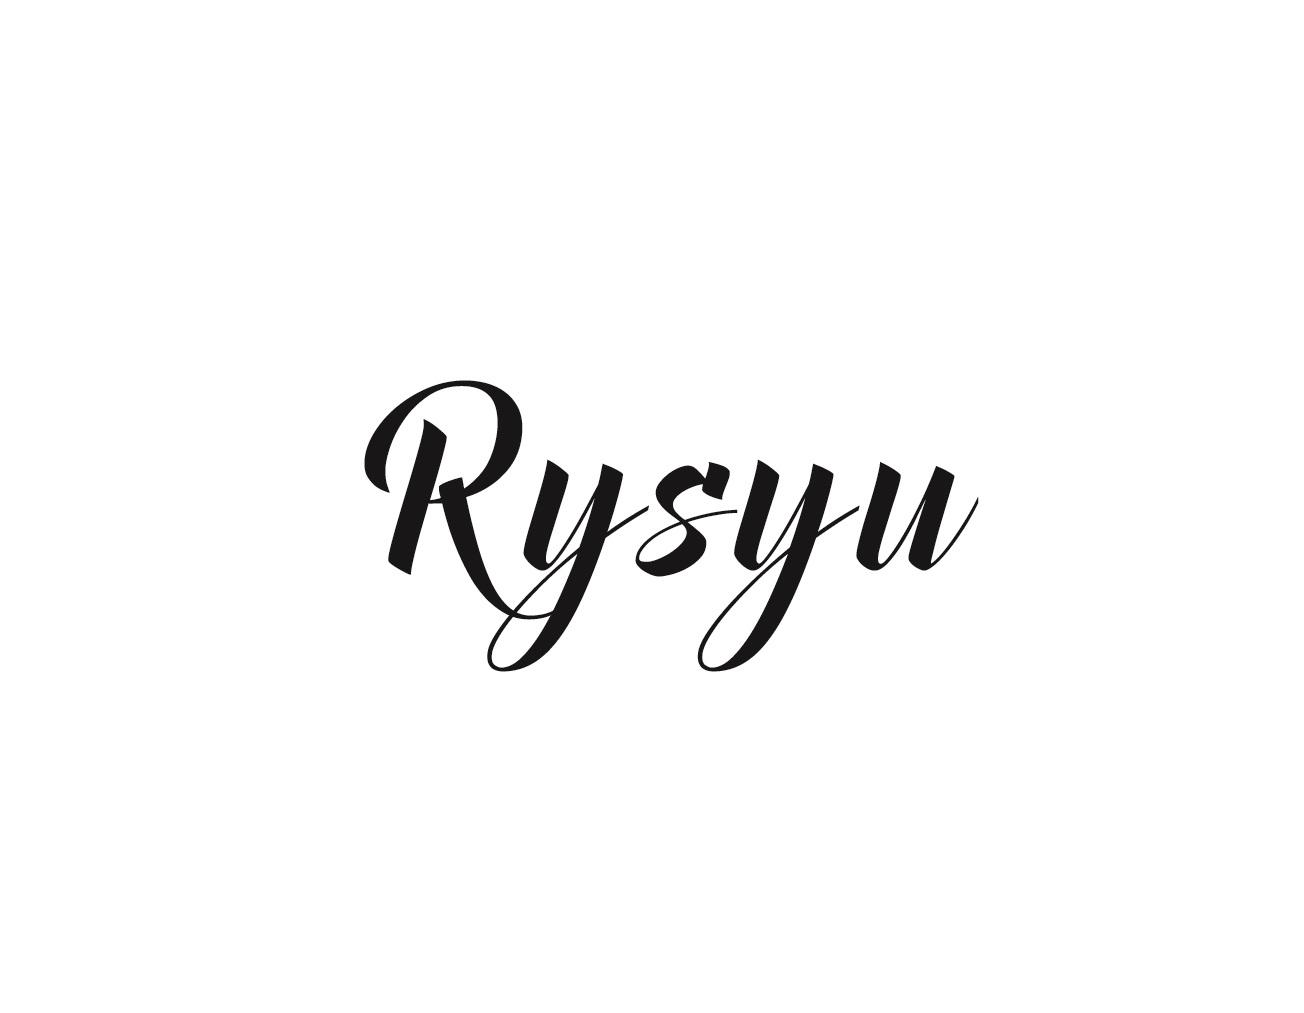 RYSYU